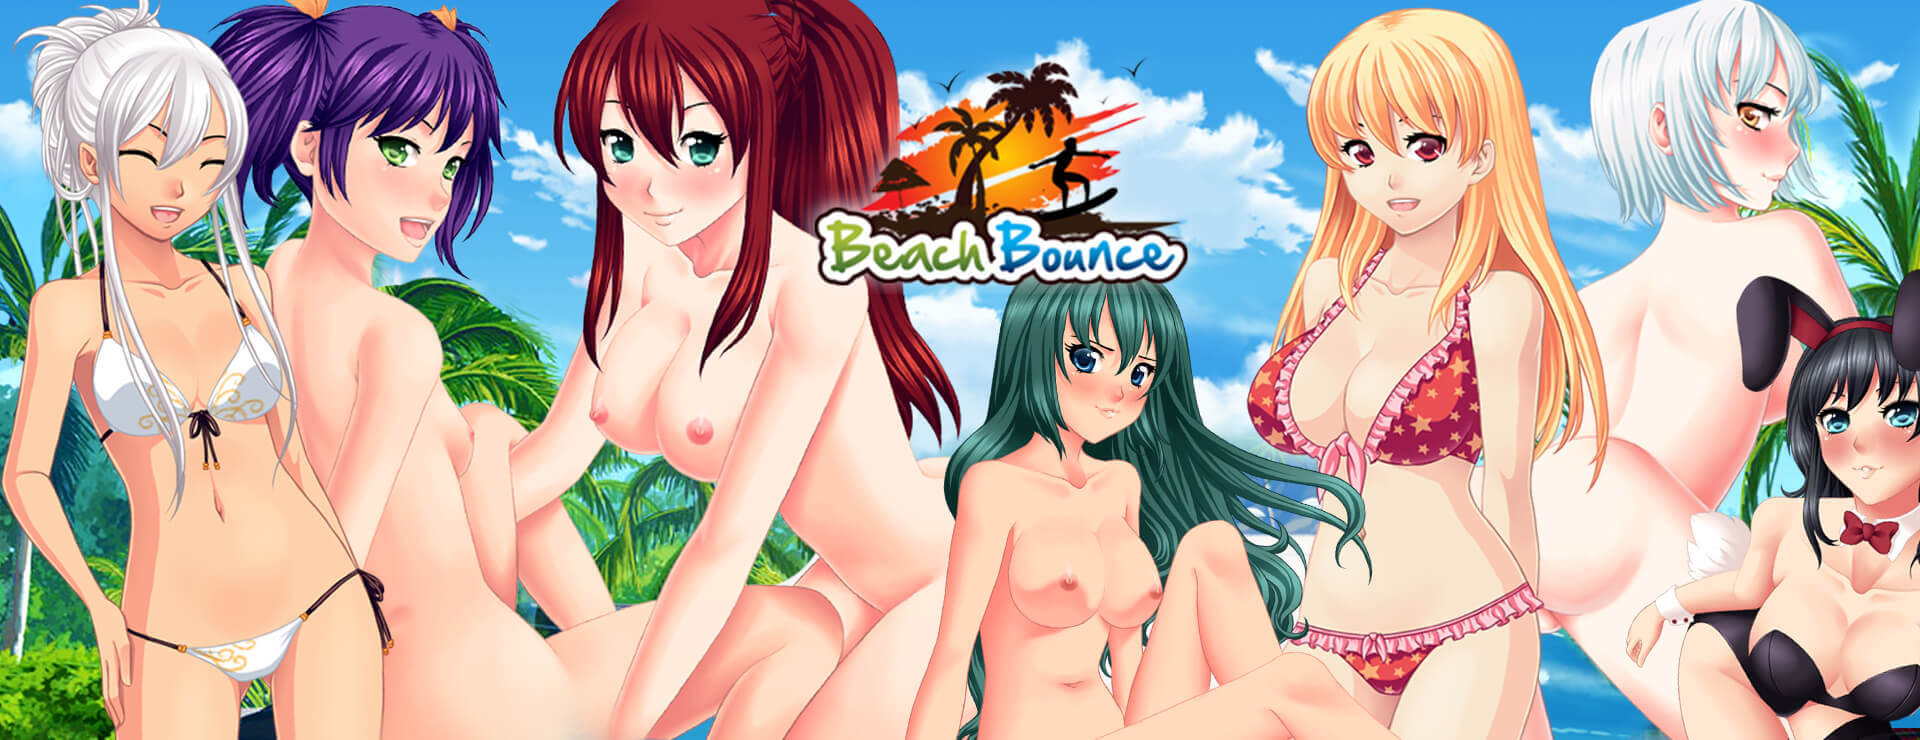 Beach Bounce - ビジュアルノベル ゲーム